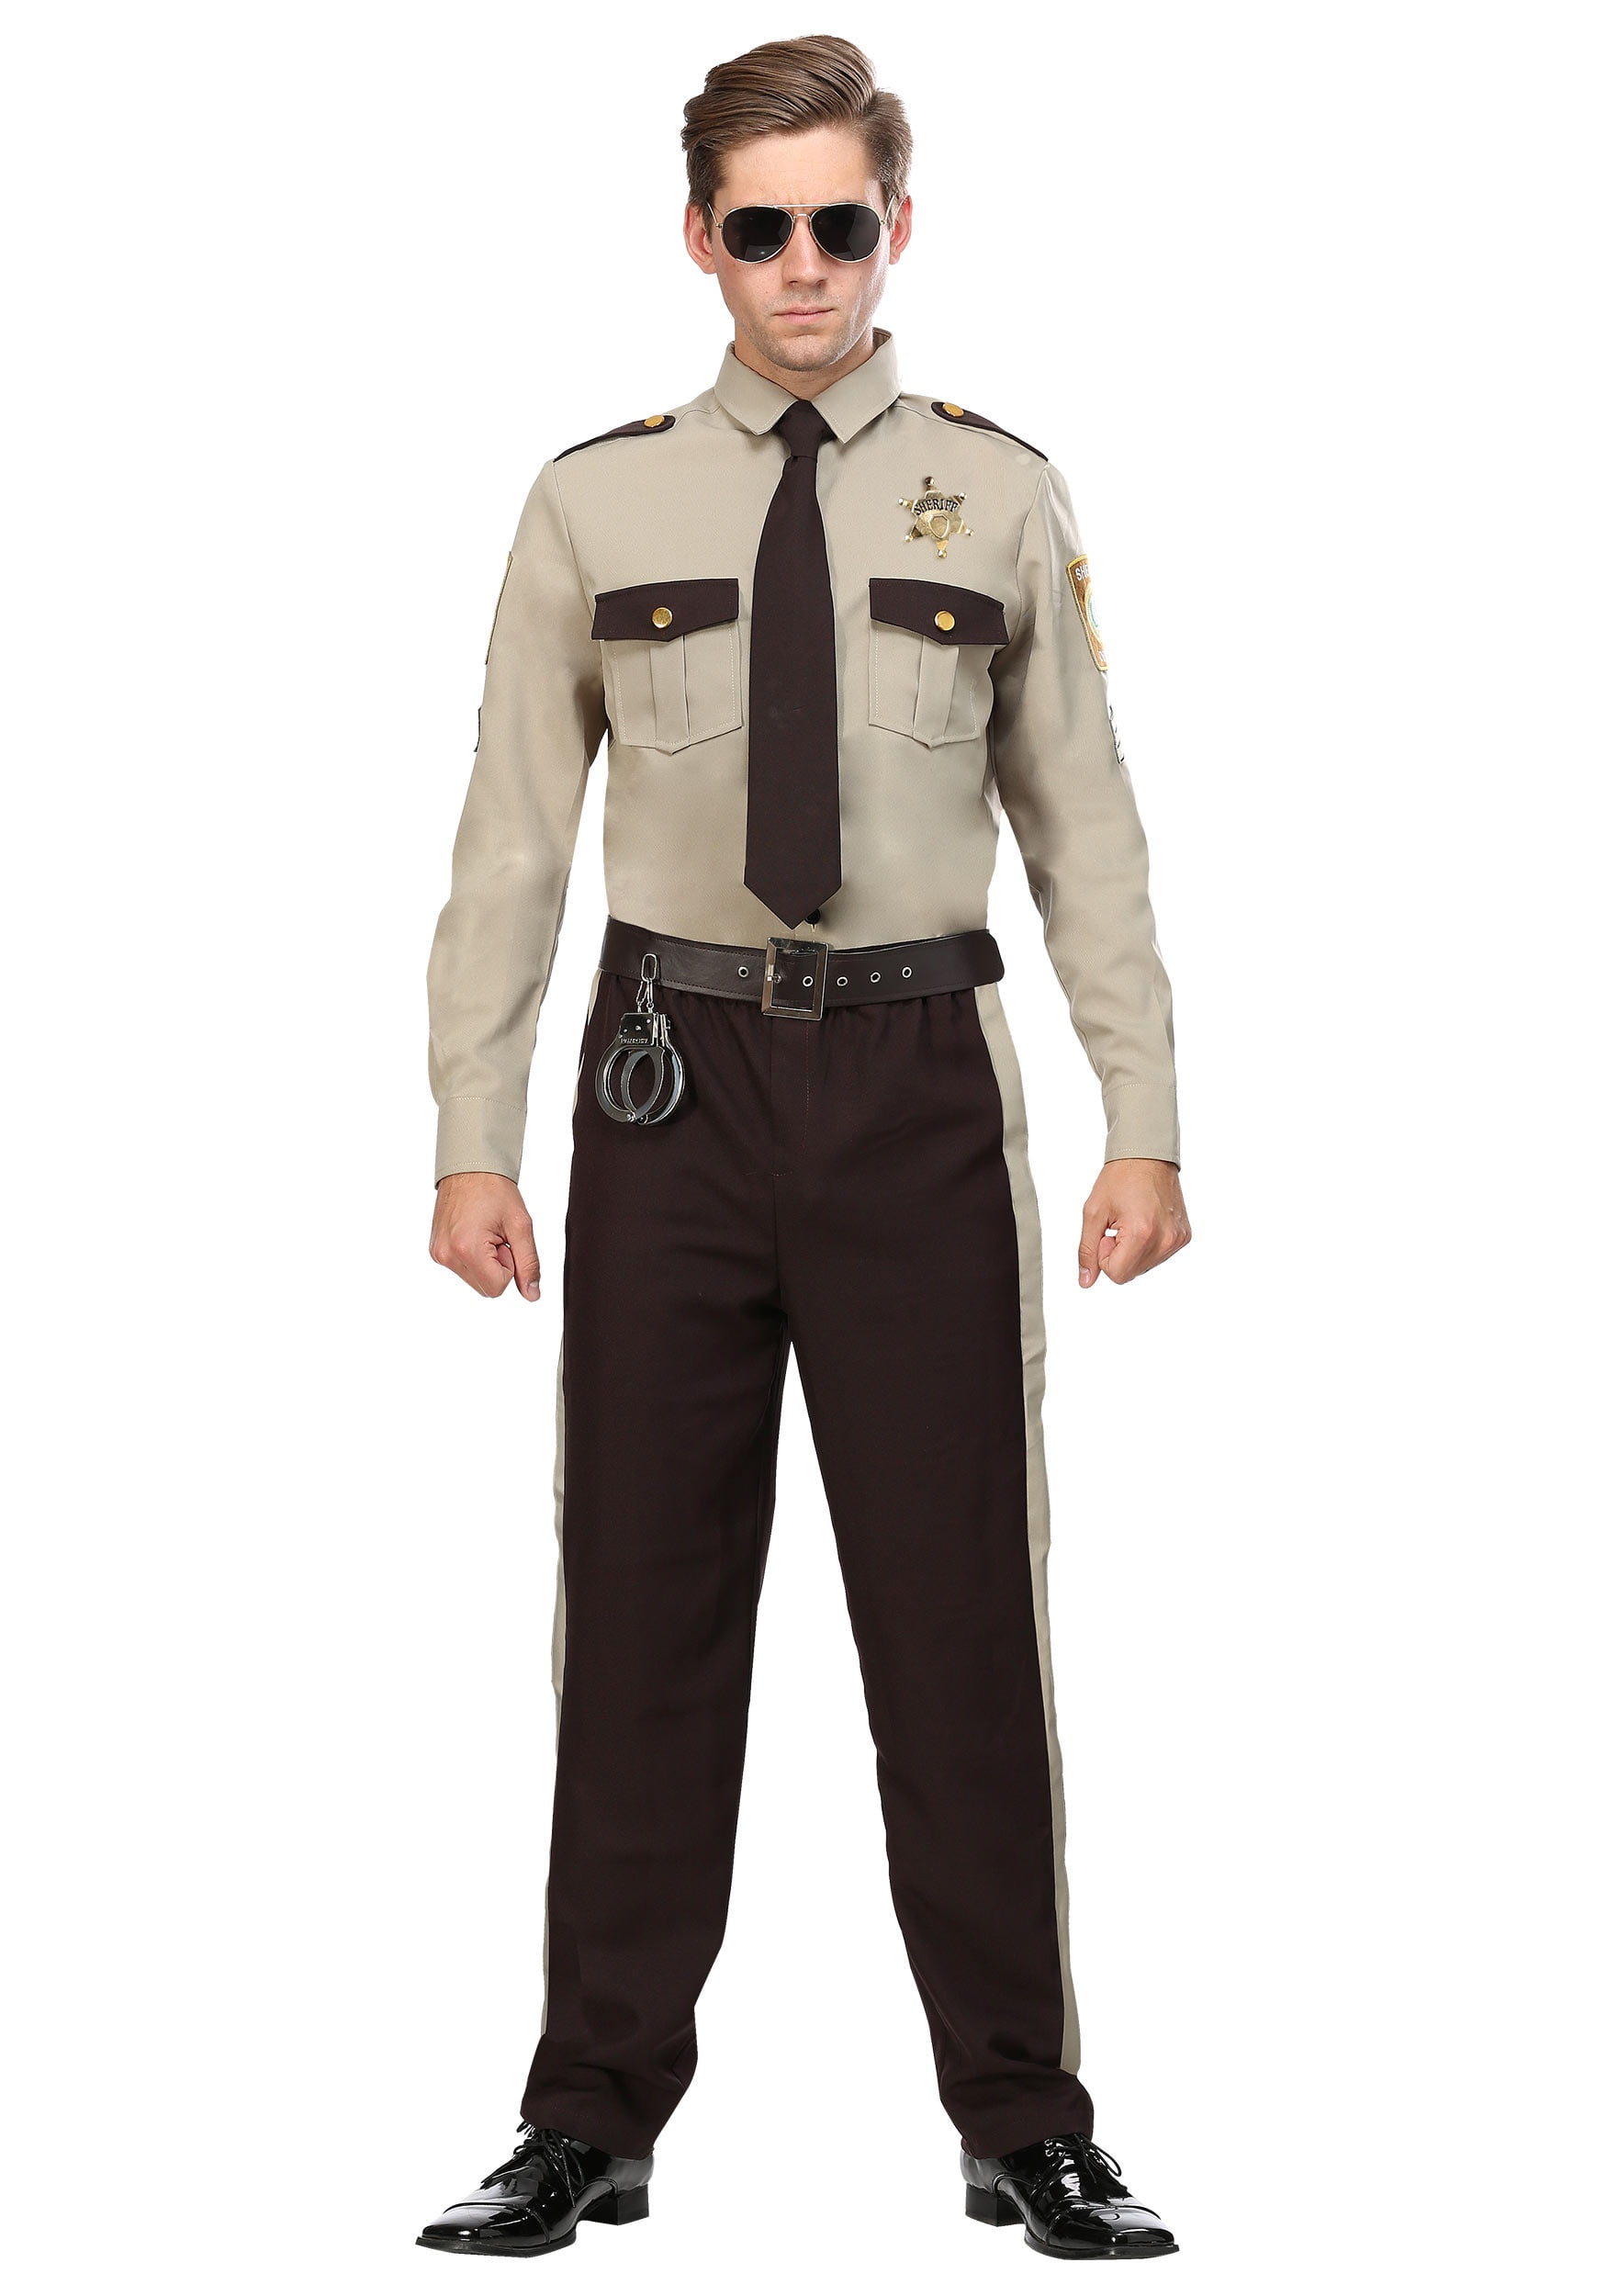 Plus Size Men's Sheriff Costume - Walmart.com